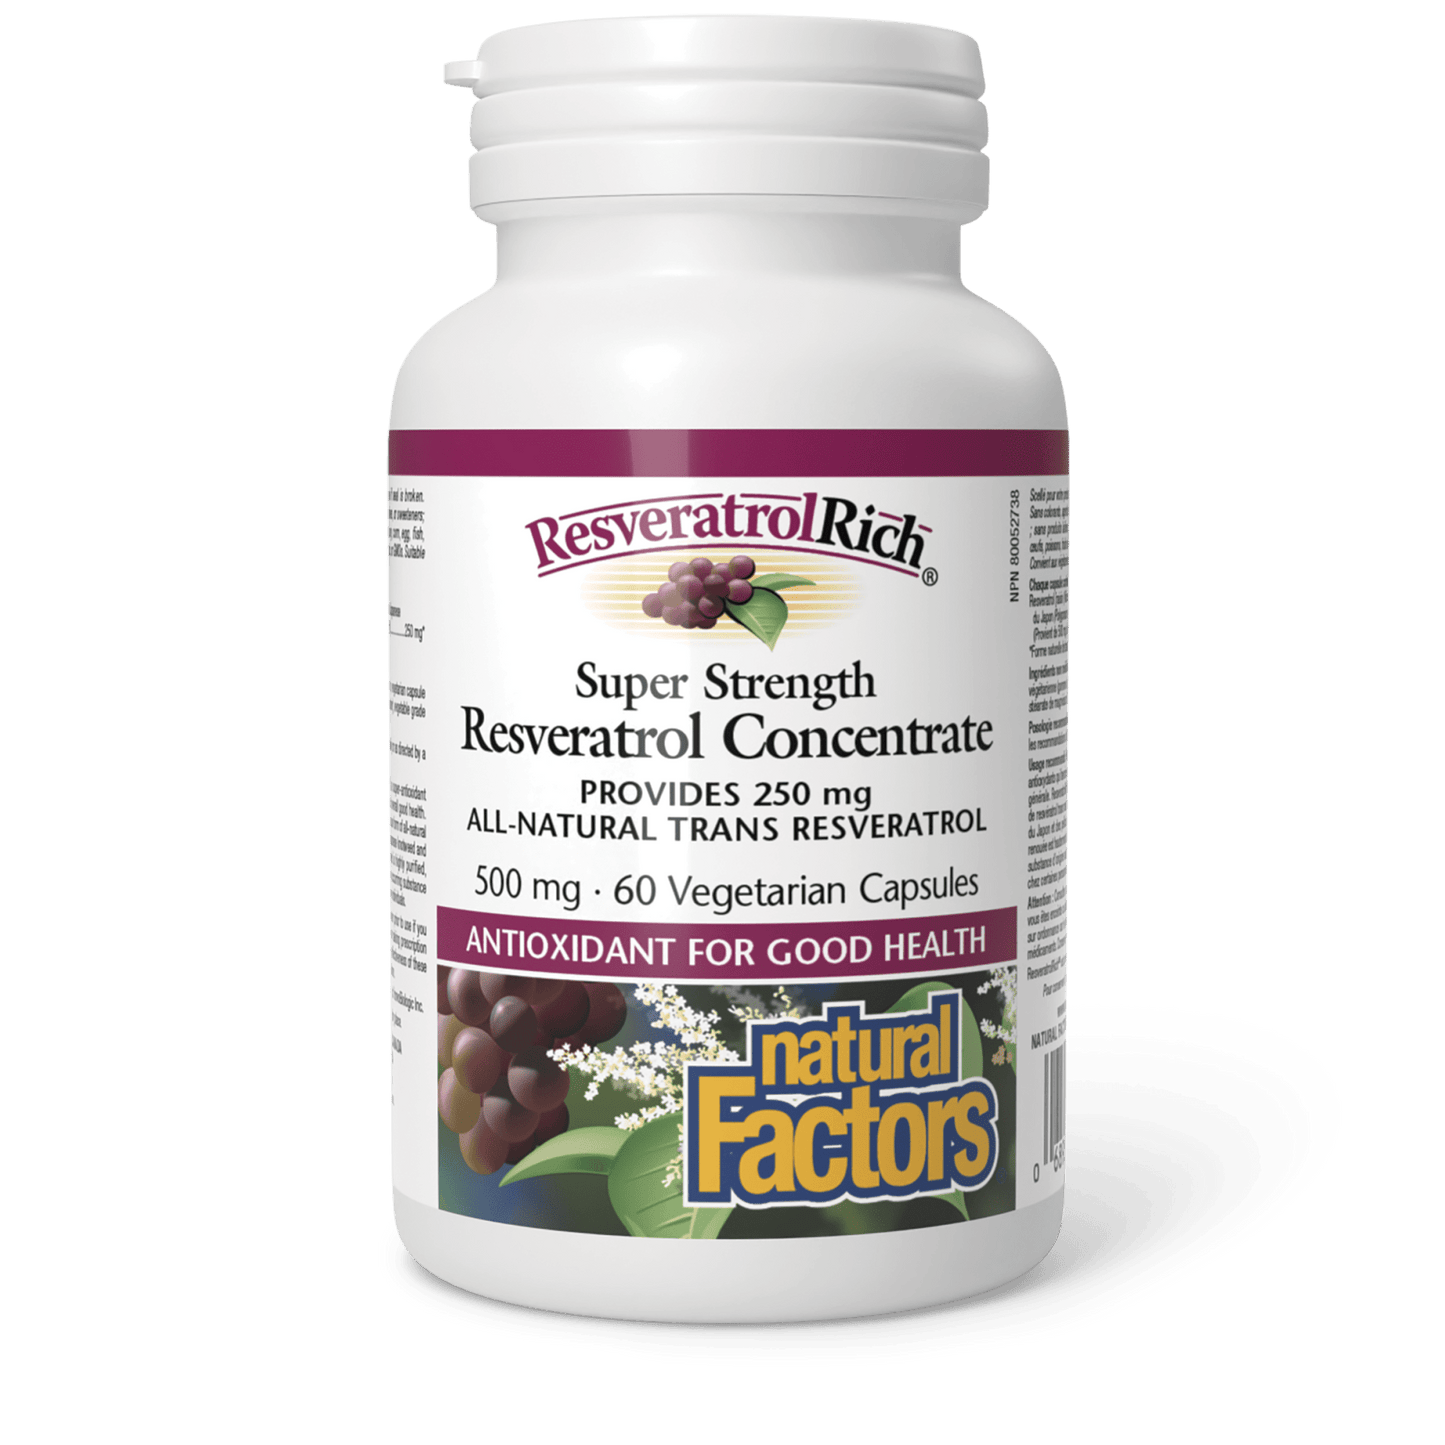 ResveratrolRich Super Strength Resveratrol Concentrate 500 mg, Natural Factors|v|image|4527